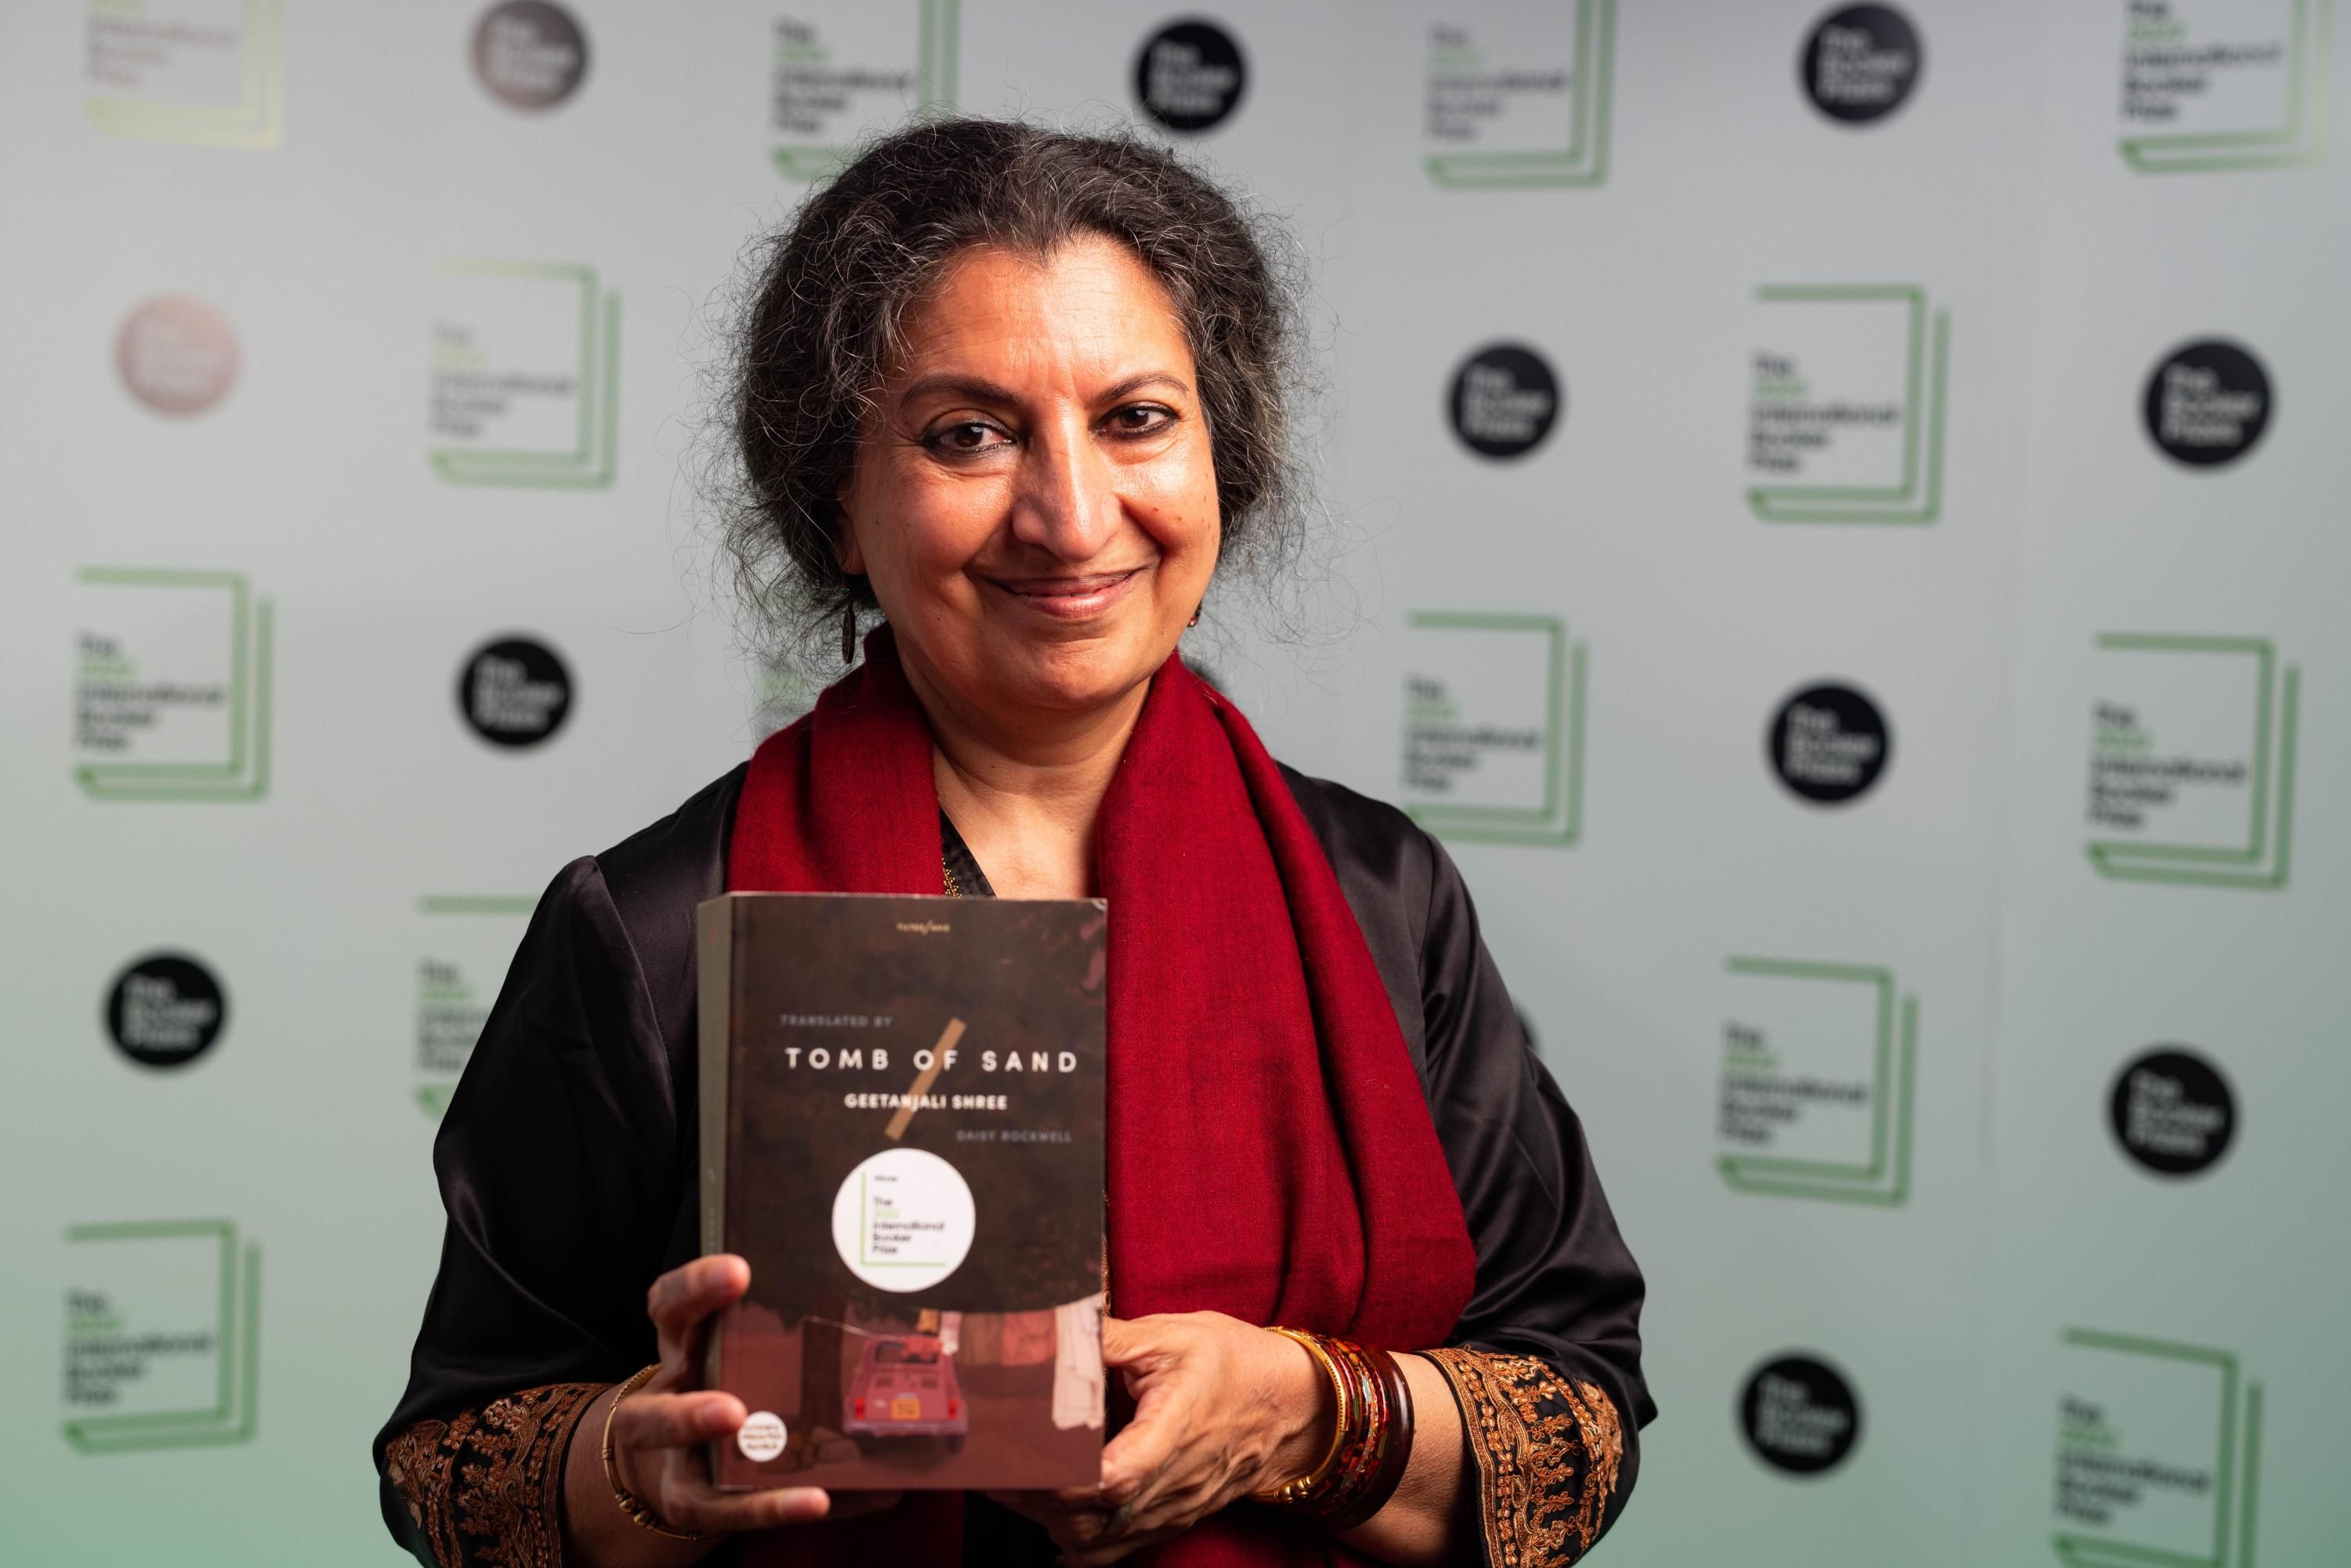 Geetanjali Shree, Winner of International Booker Prize for her book 'Ret Samadhi' translated into 'Tomb of Sand'